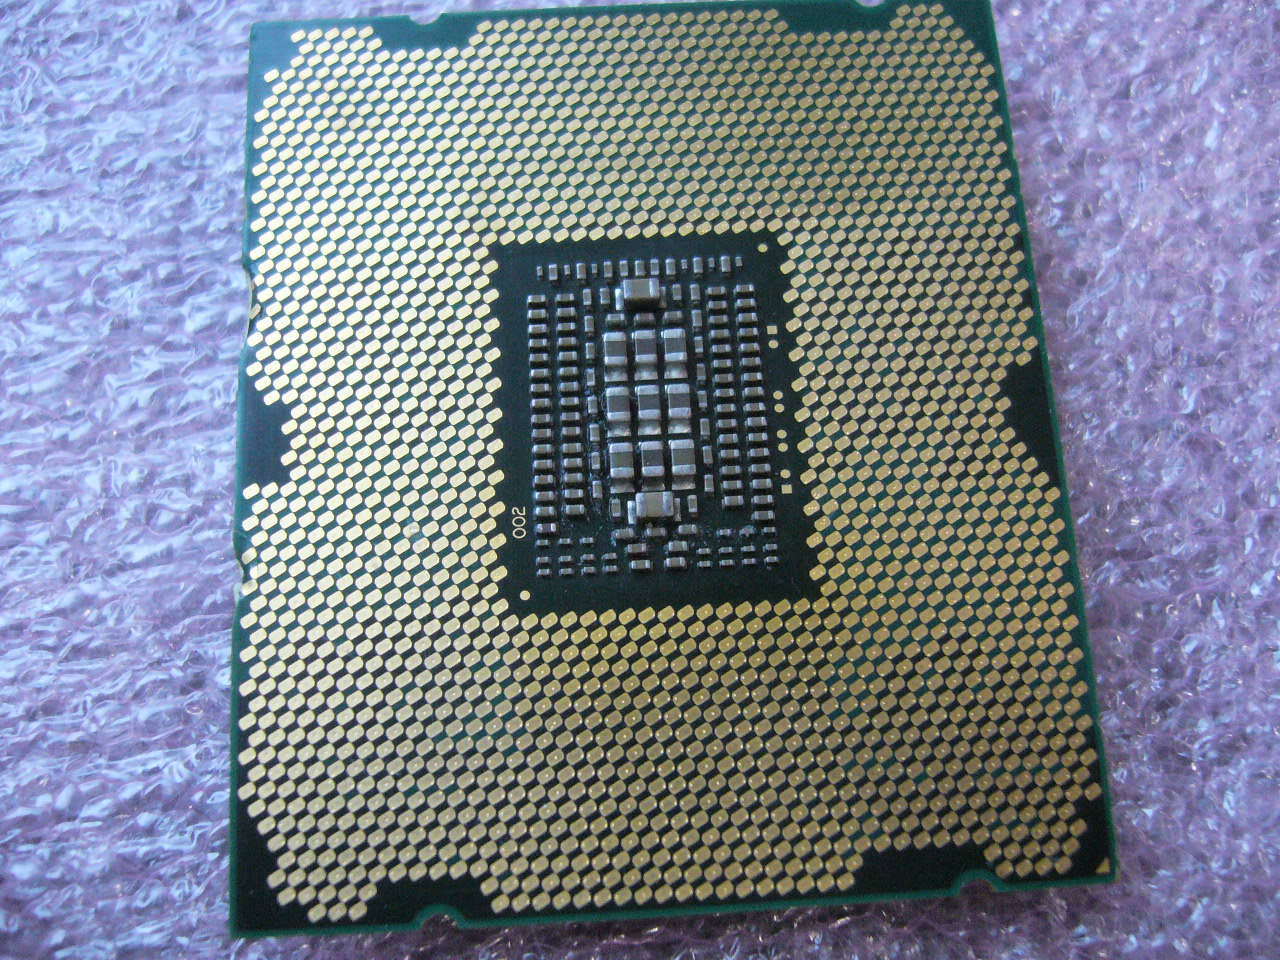 QTY 1x Intel CPU E5-1650 CPU 6-Cores 3.2Ghz LGA2011 SR0KZ NOT WORKING - Click Image to Close